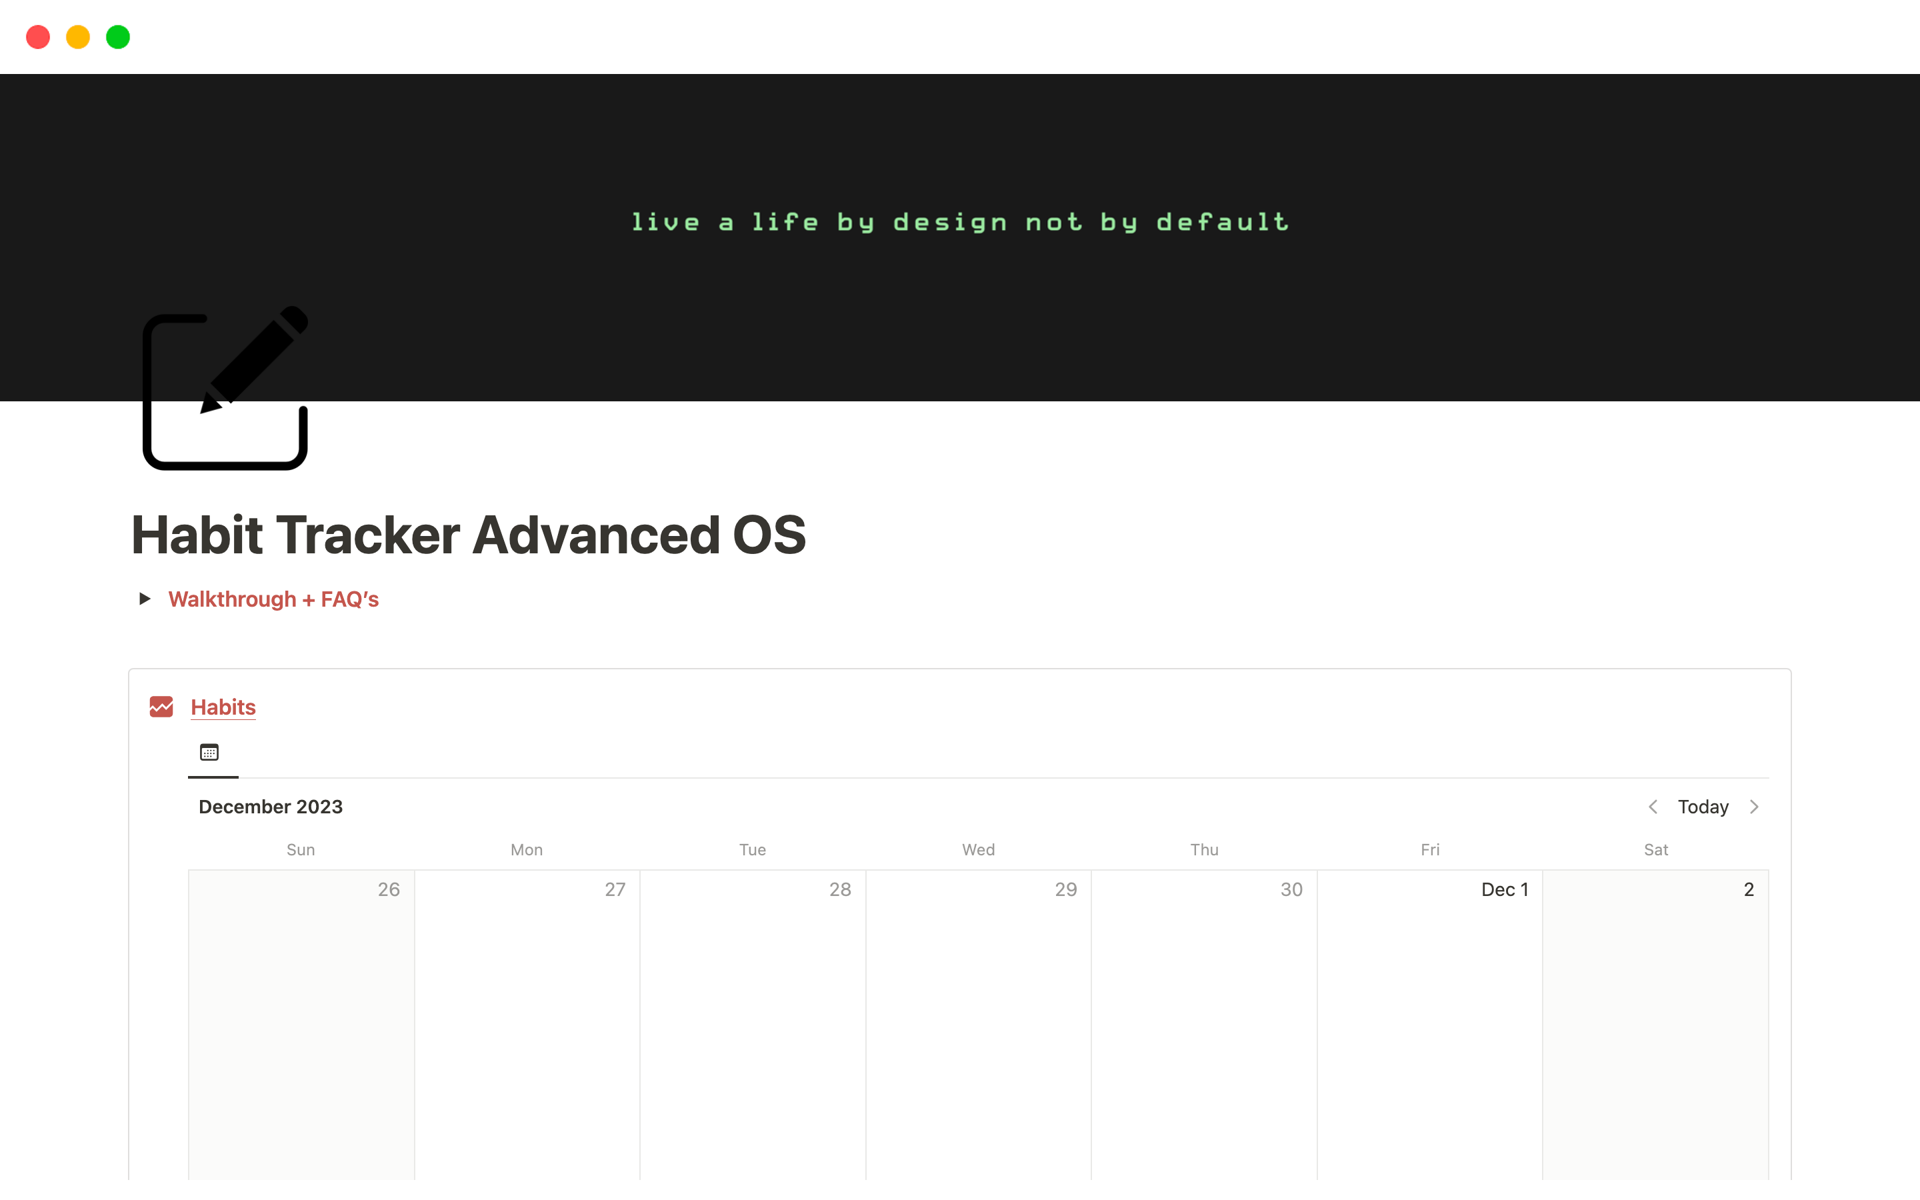 Habit Tracker Advanced OS